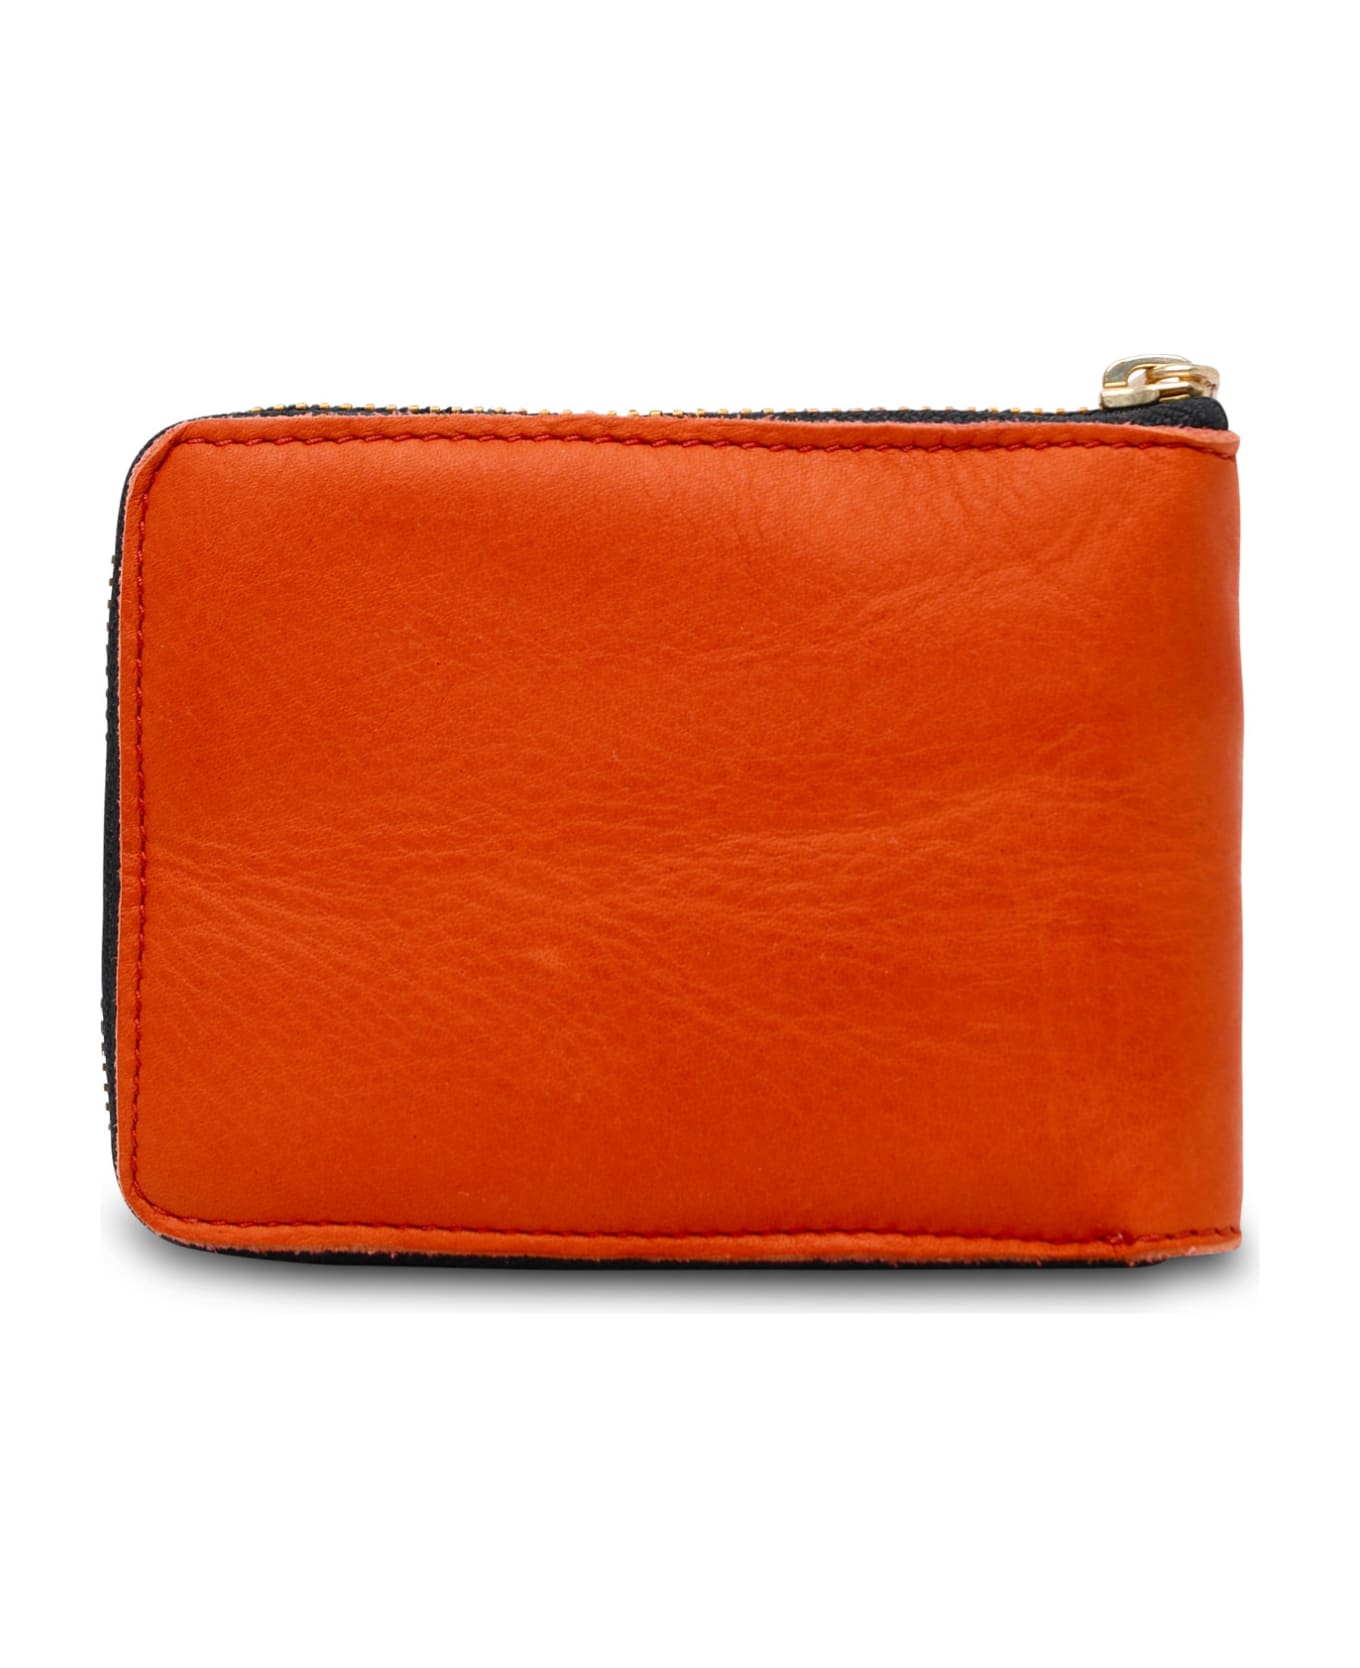 Comme des Garçons Wallet Green Leather Wallet - Orange